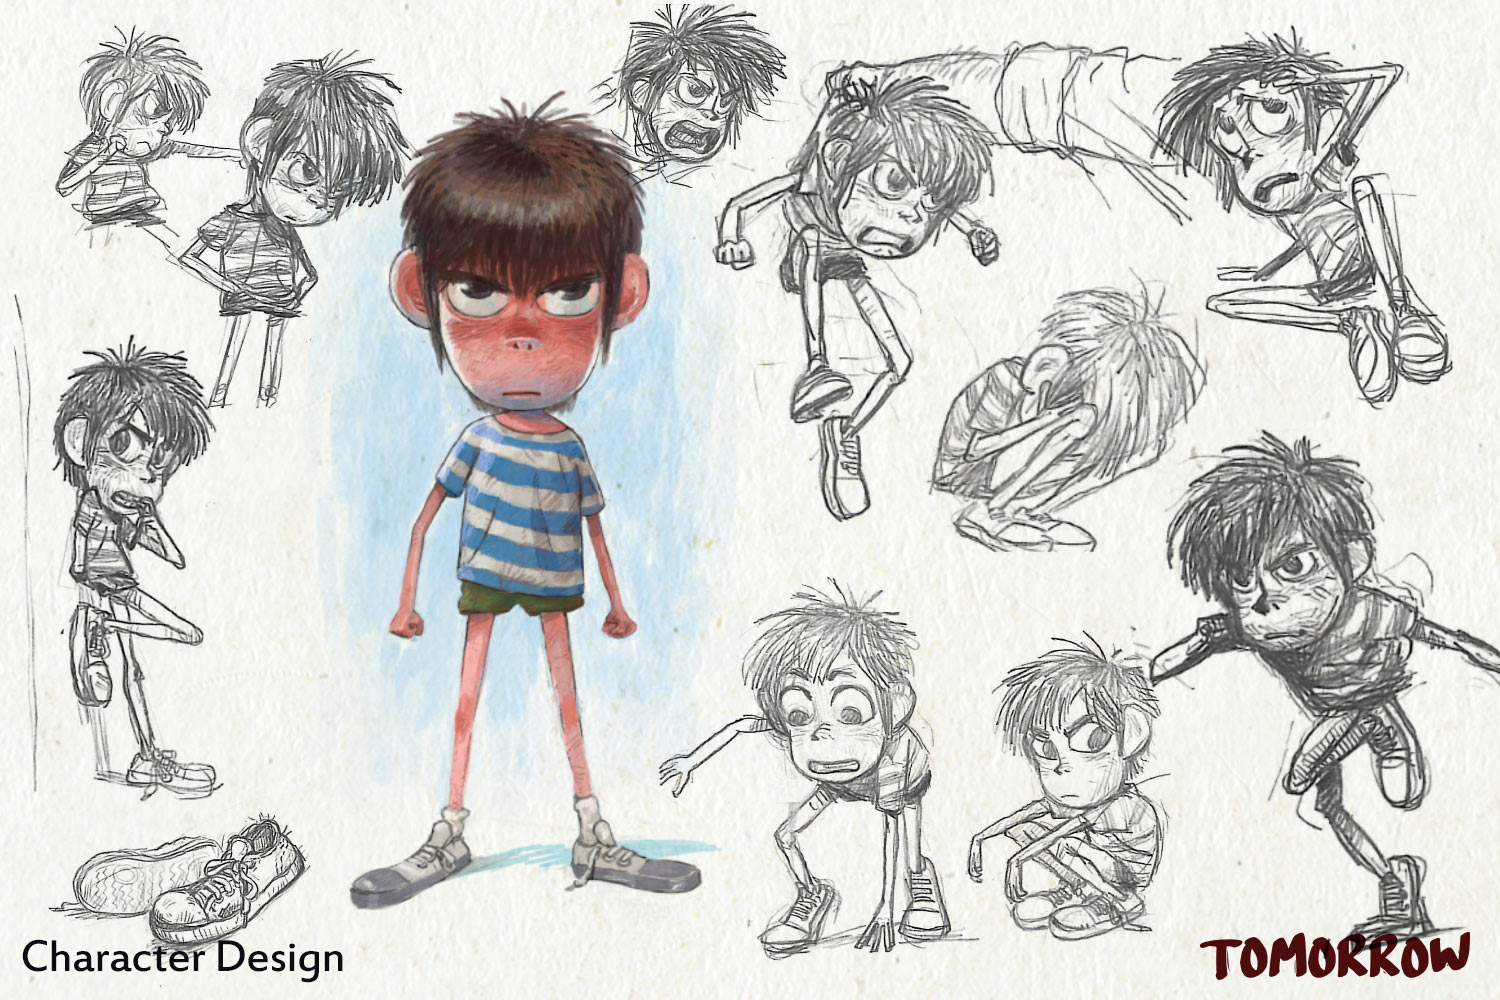 Character design by Mehdi Alibeygi.